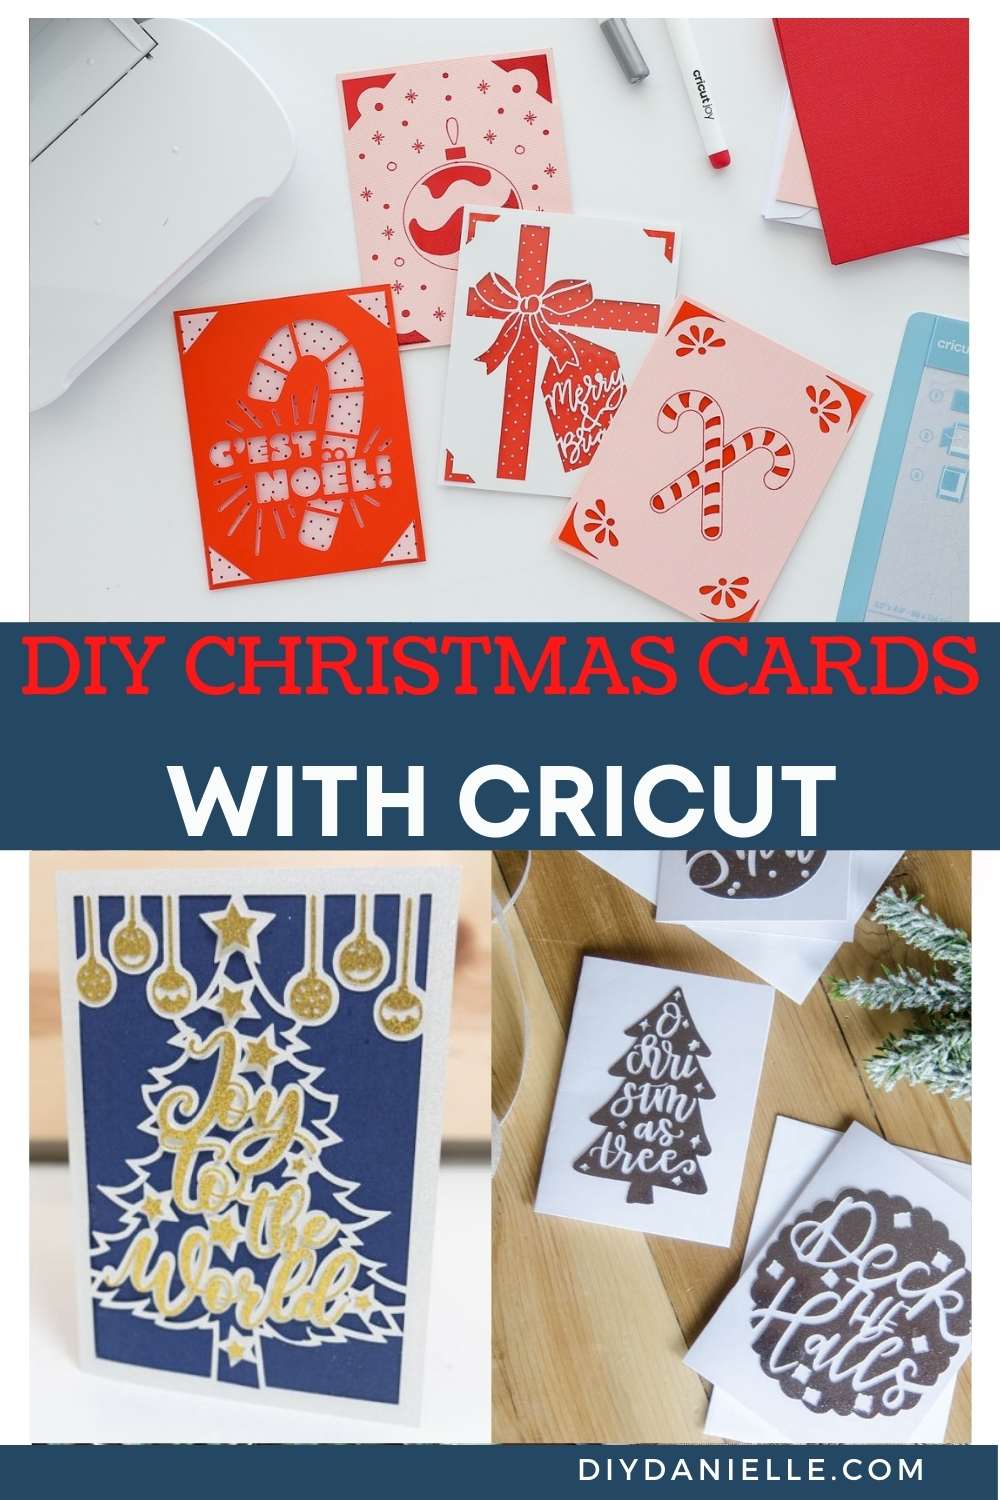 homemade cards with cricut